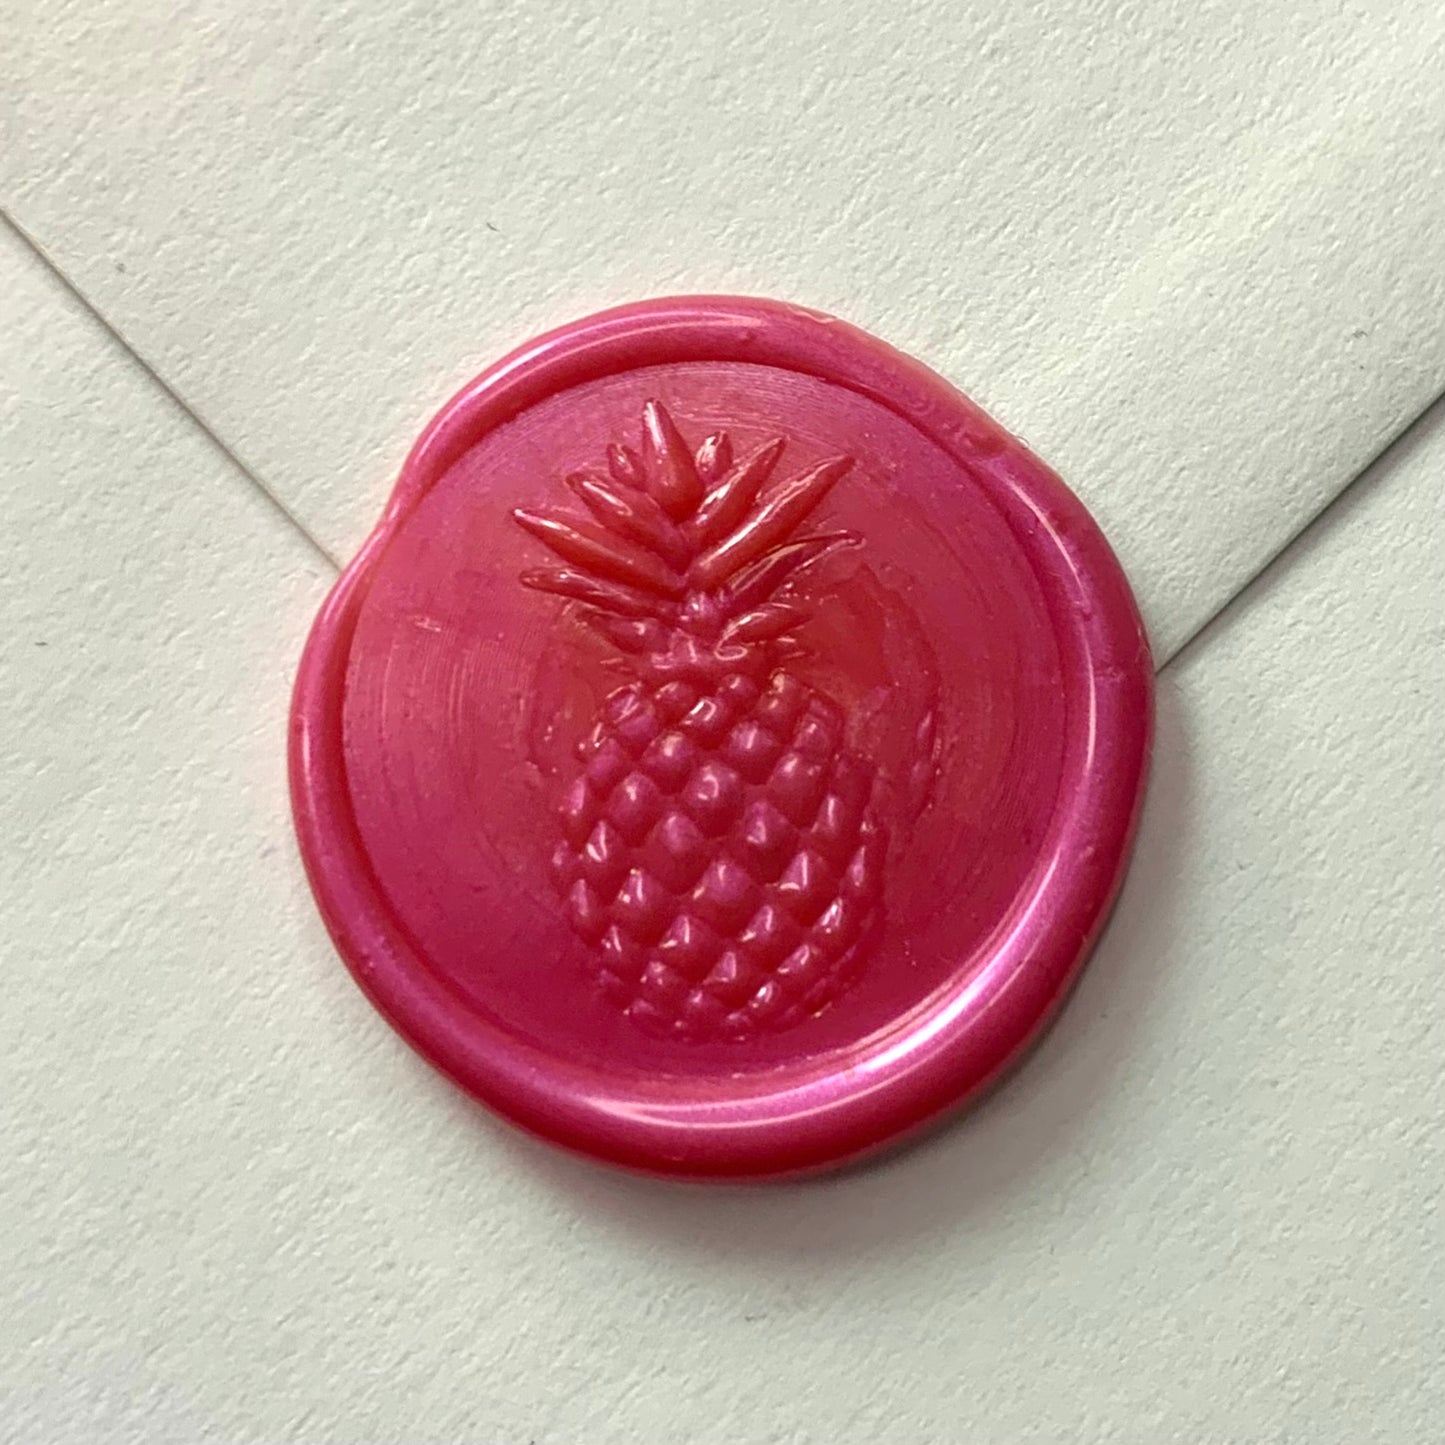 Pineapple Wax Seal - self sealing